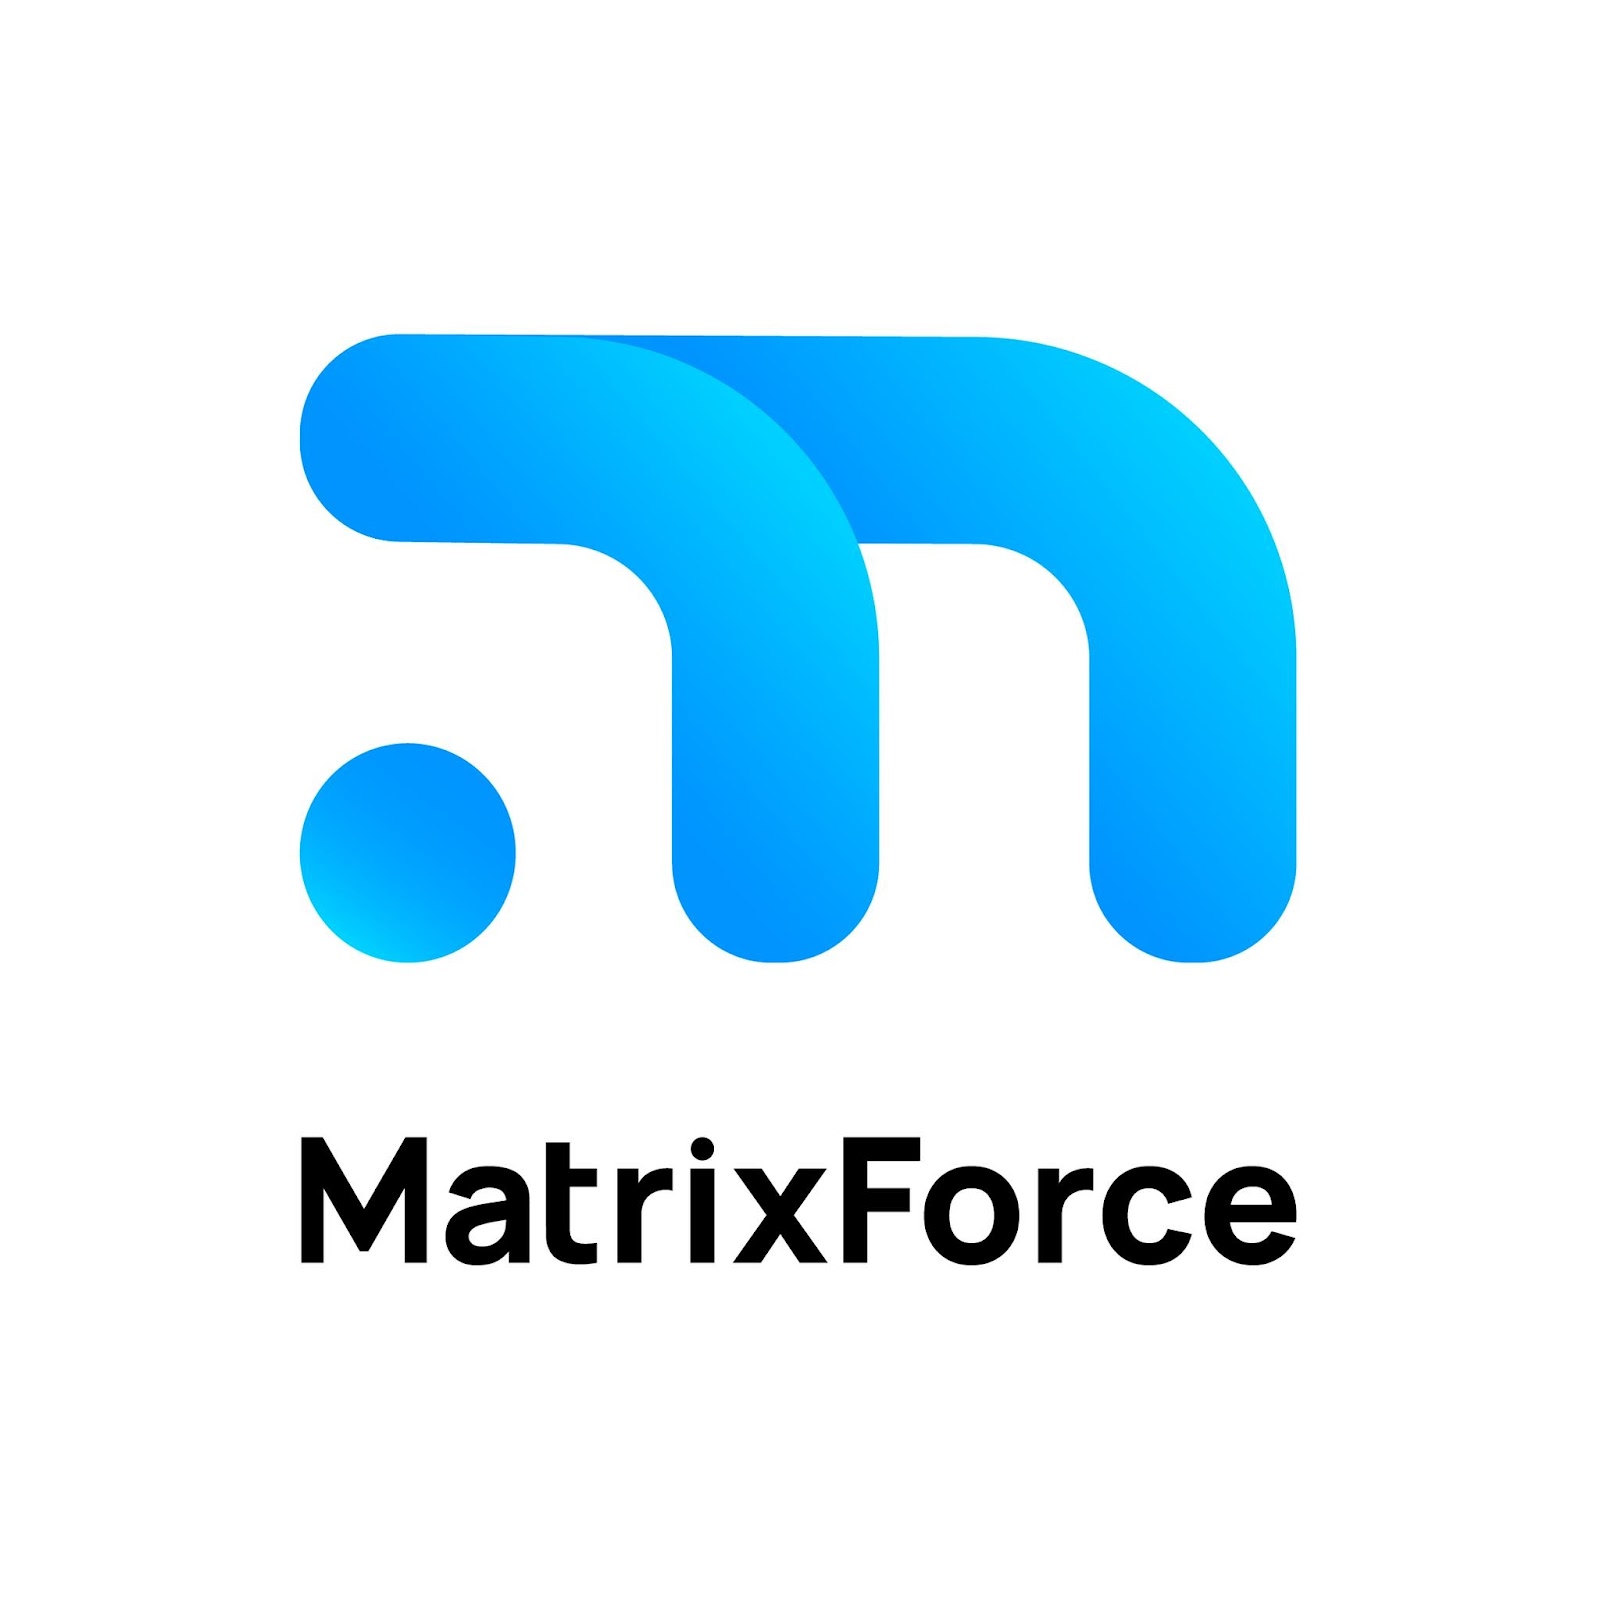 MatrixForce_logo.jpg